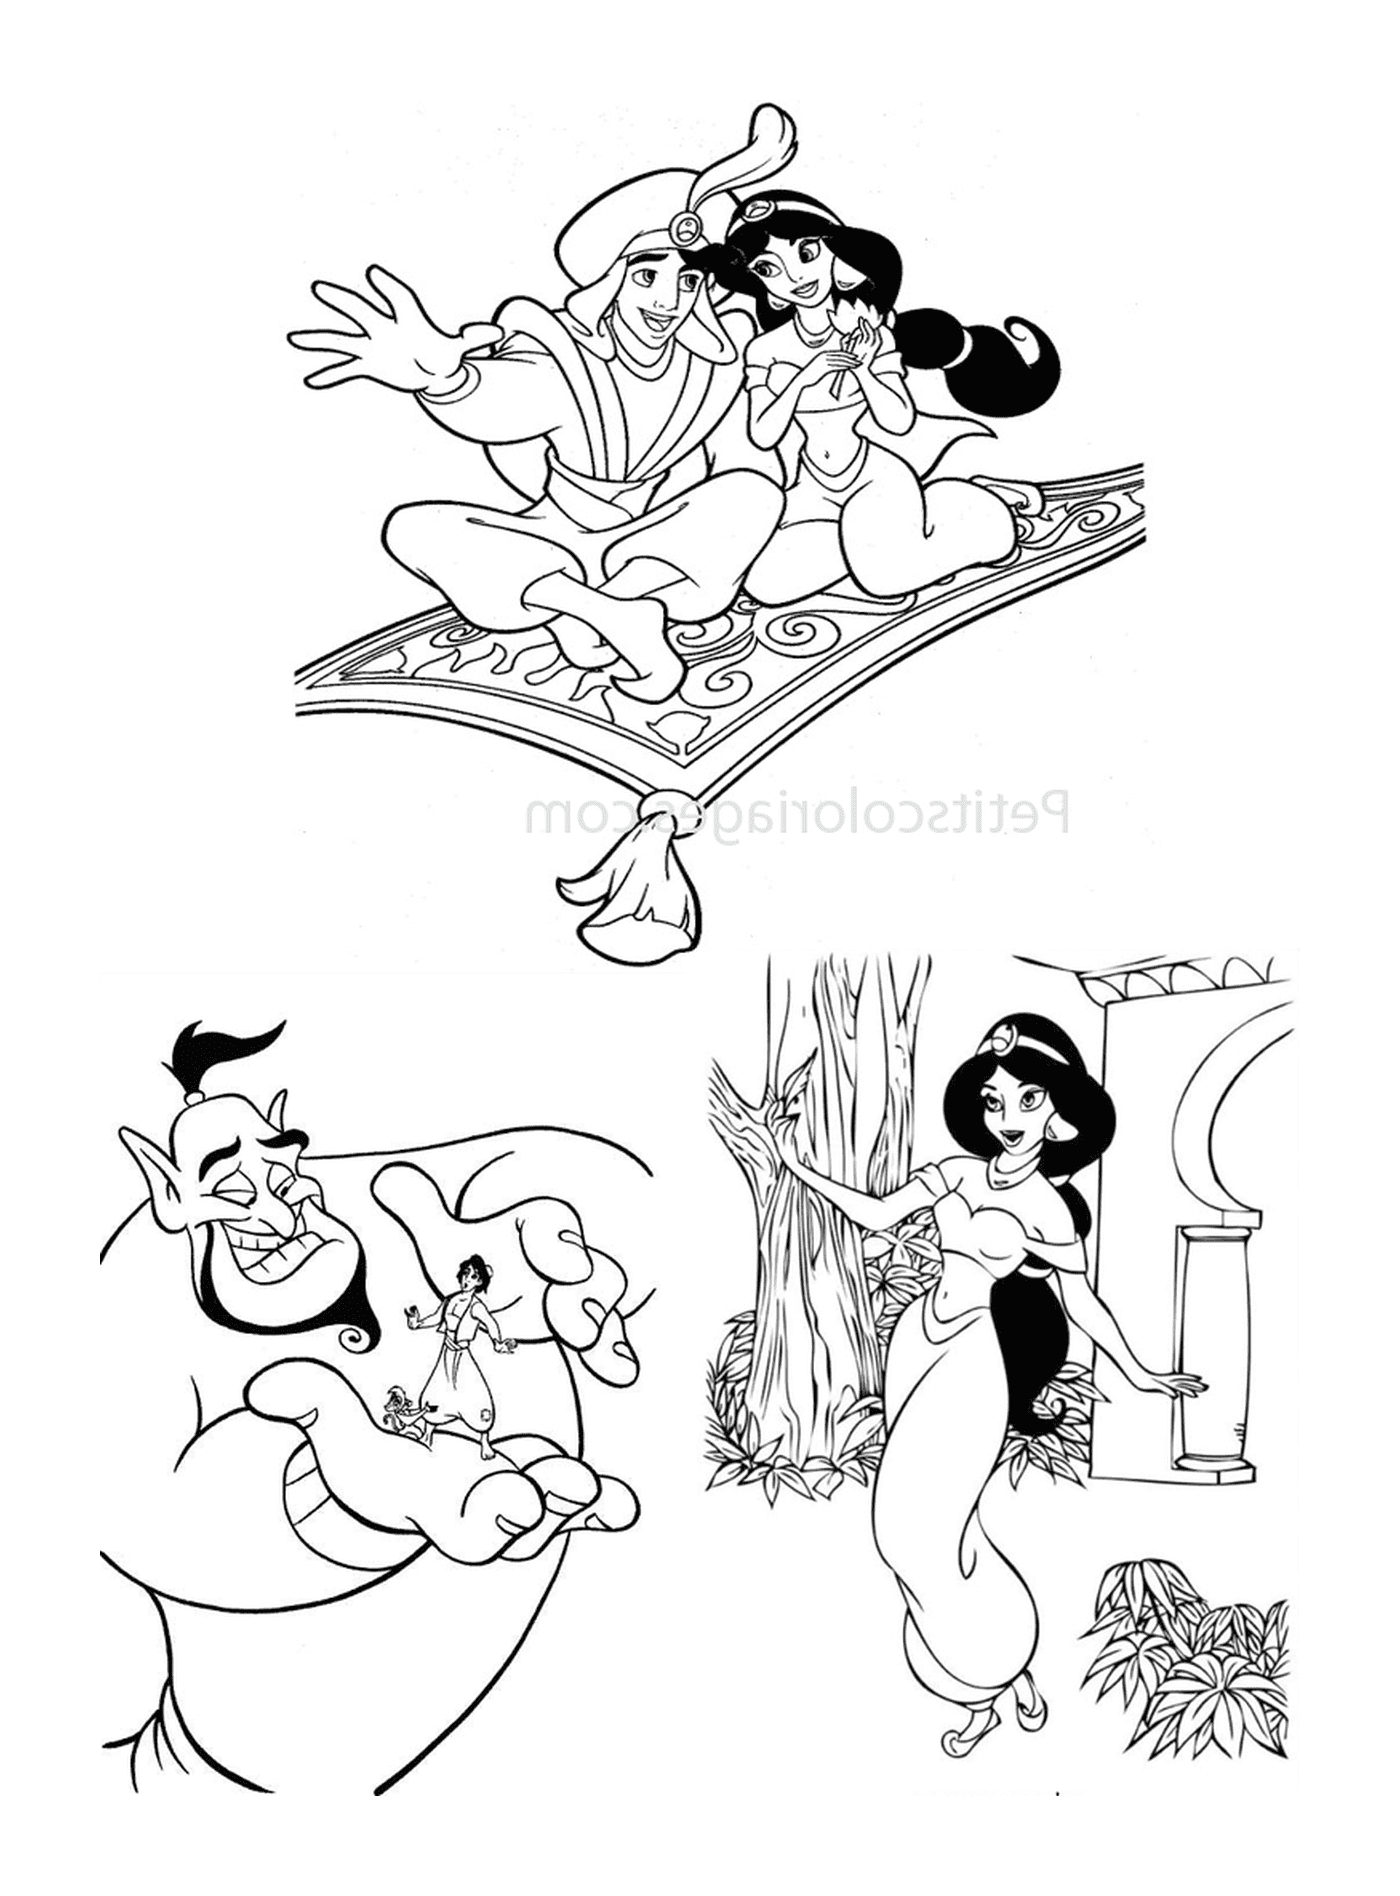  Drawings of cartoon characters 